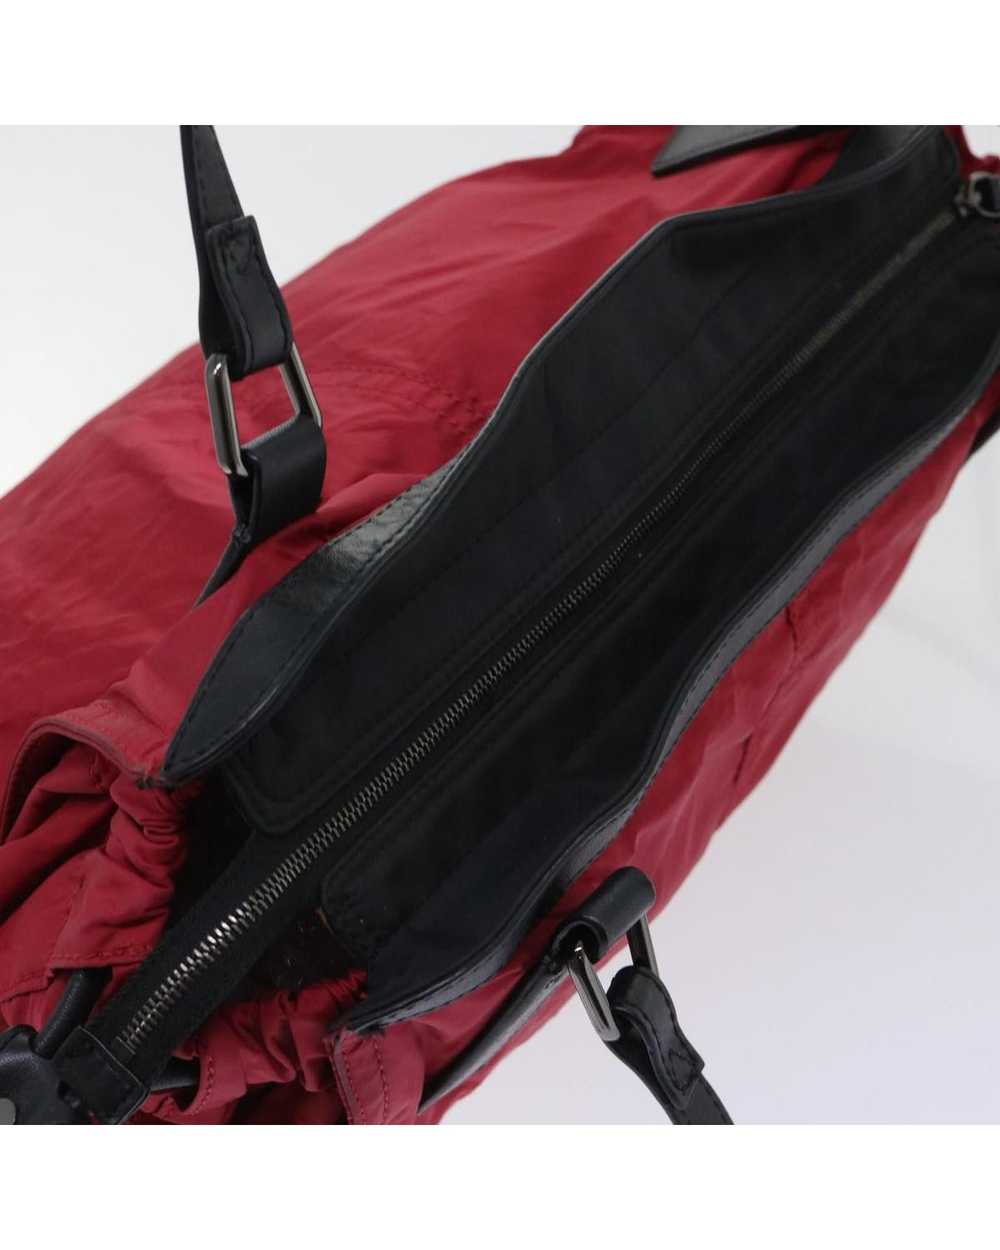 Burberry Red Nylon Leather Shoulder Bag - image 6